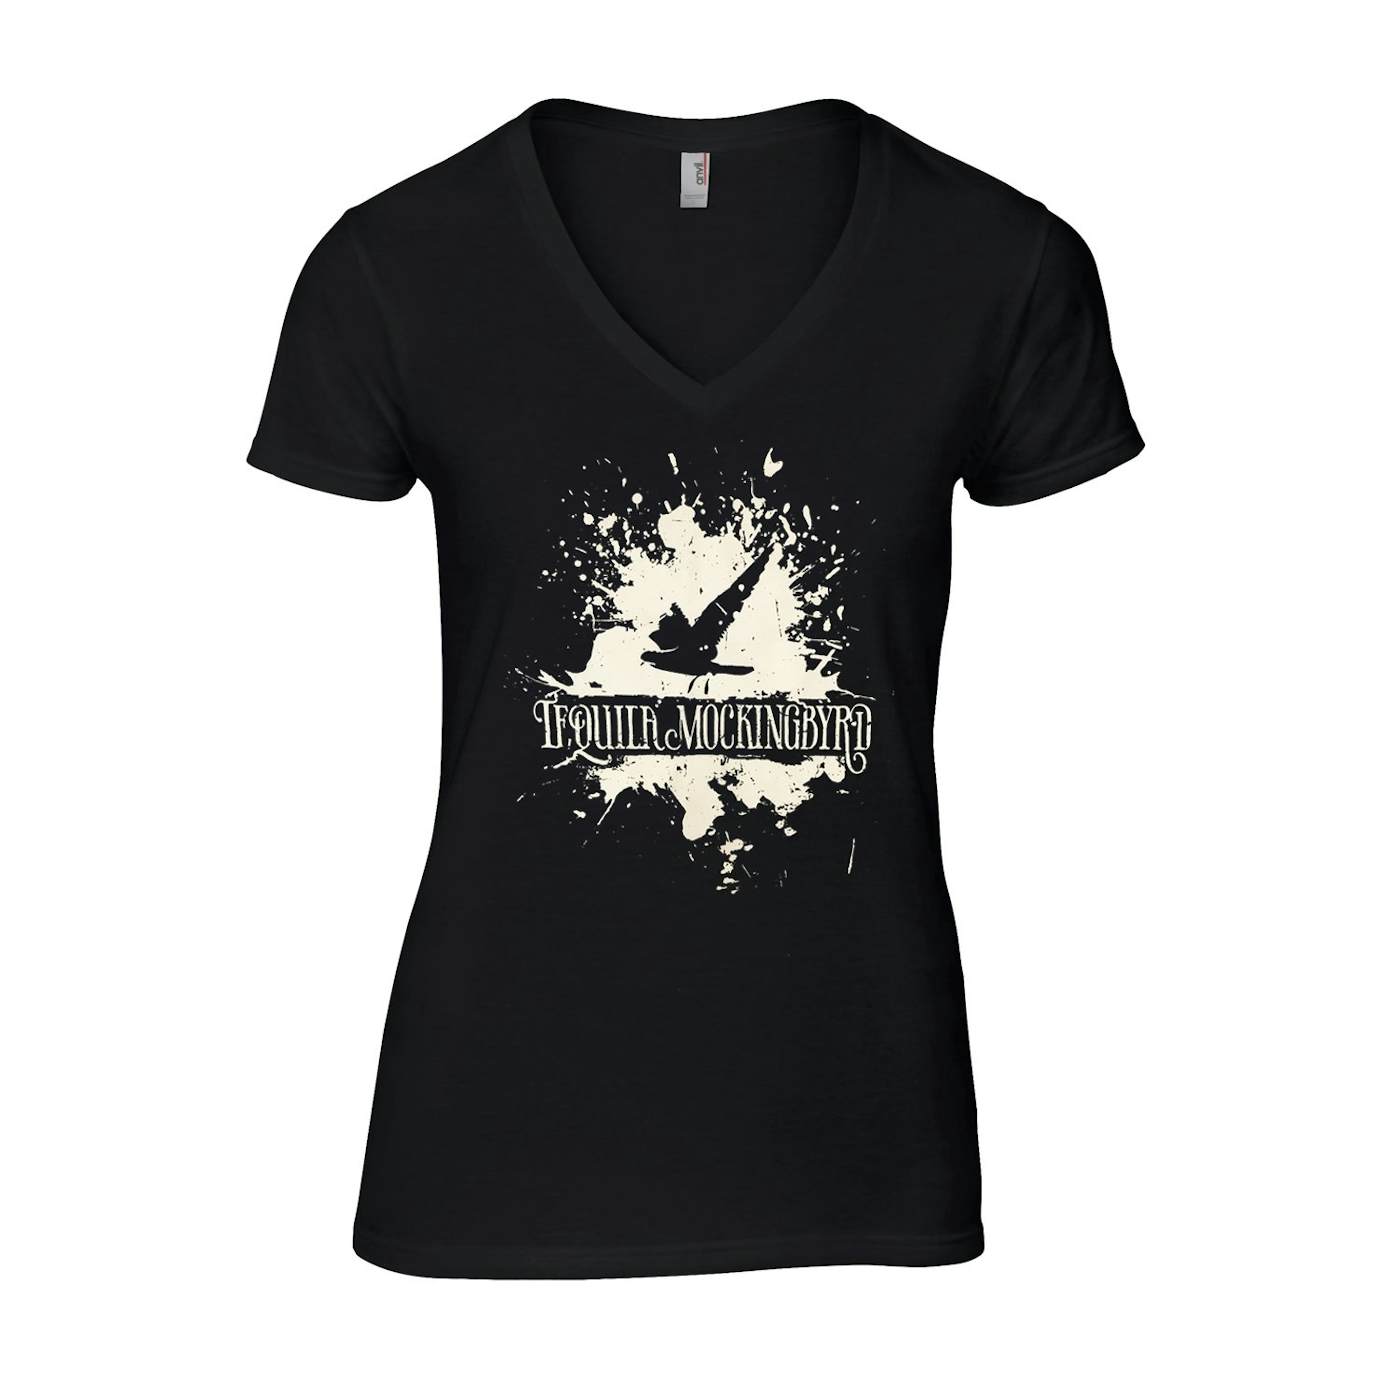 Tequila Mockingbyrd Splat Womens T-shirt (Black)